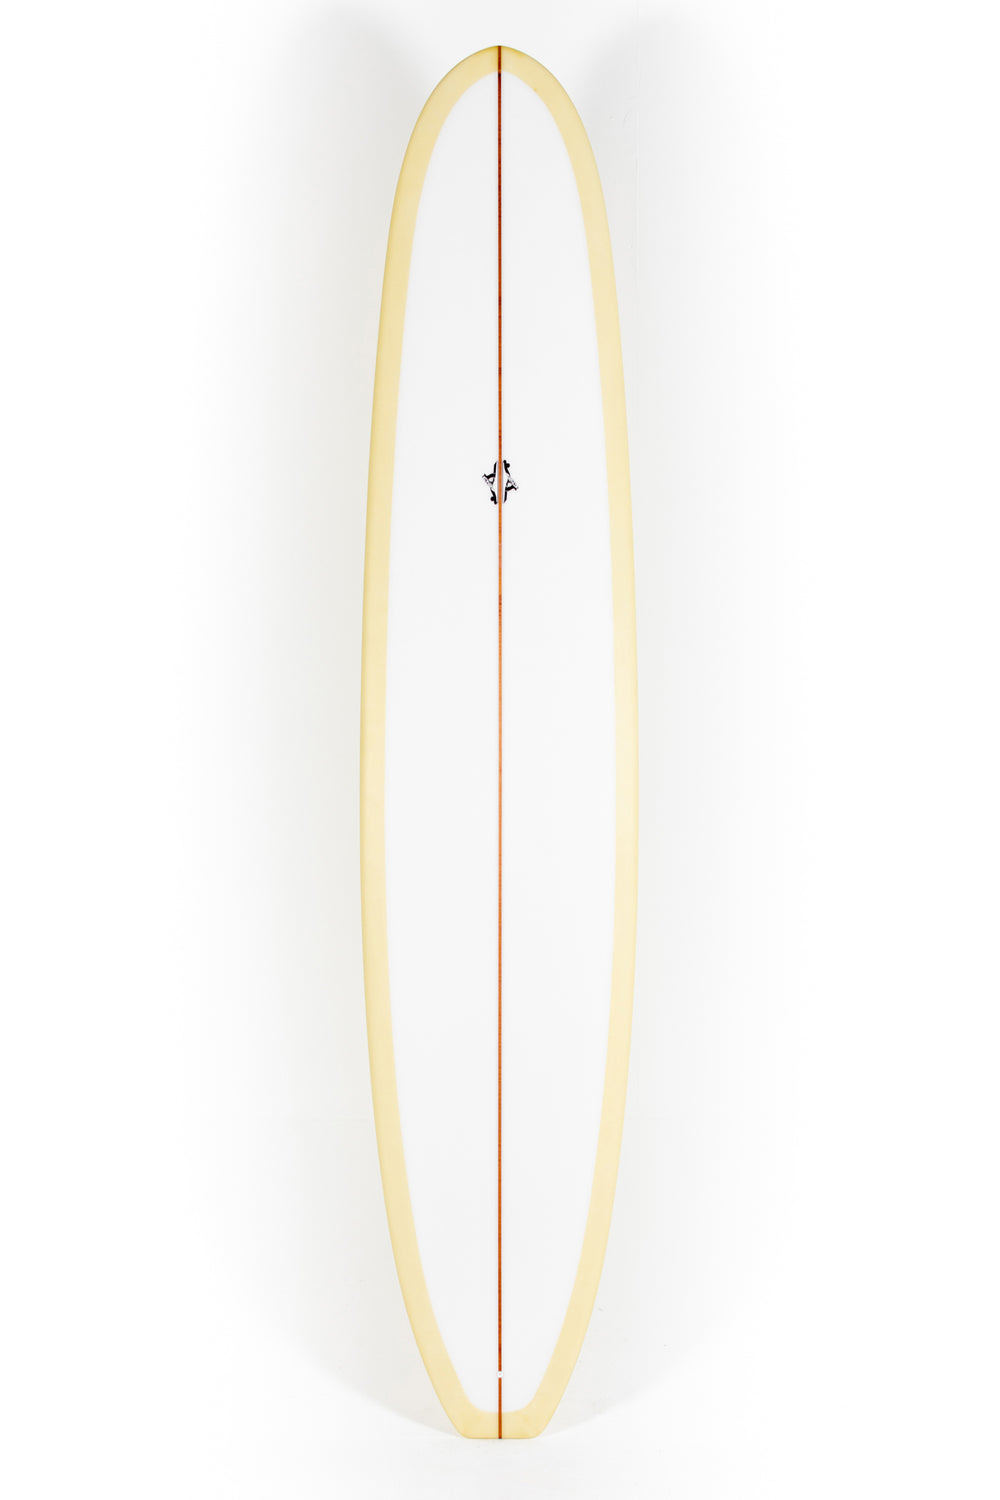 Pukas Surf Shop - Thomas Surfboards - TOWN BIKE - 9'6